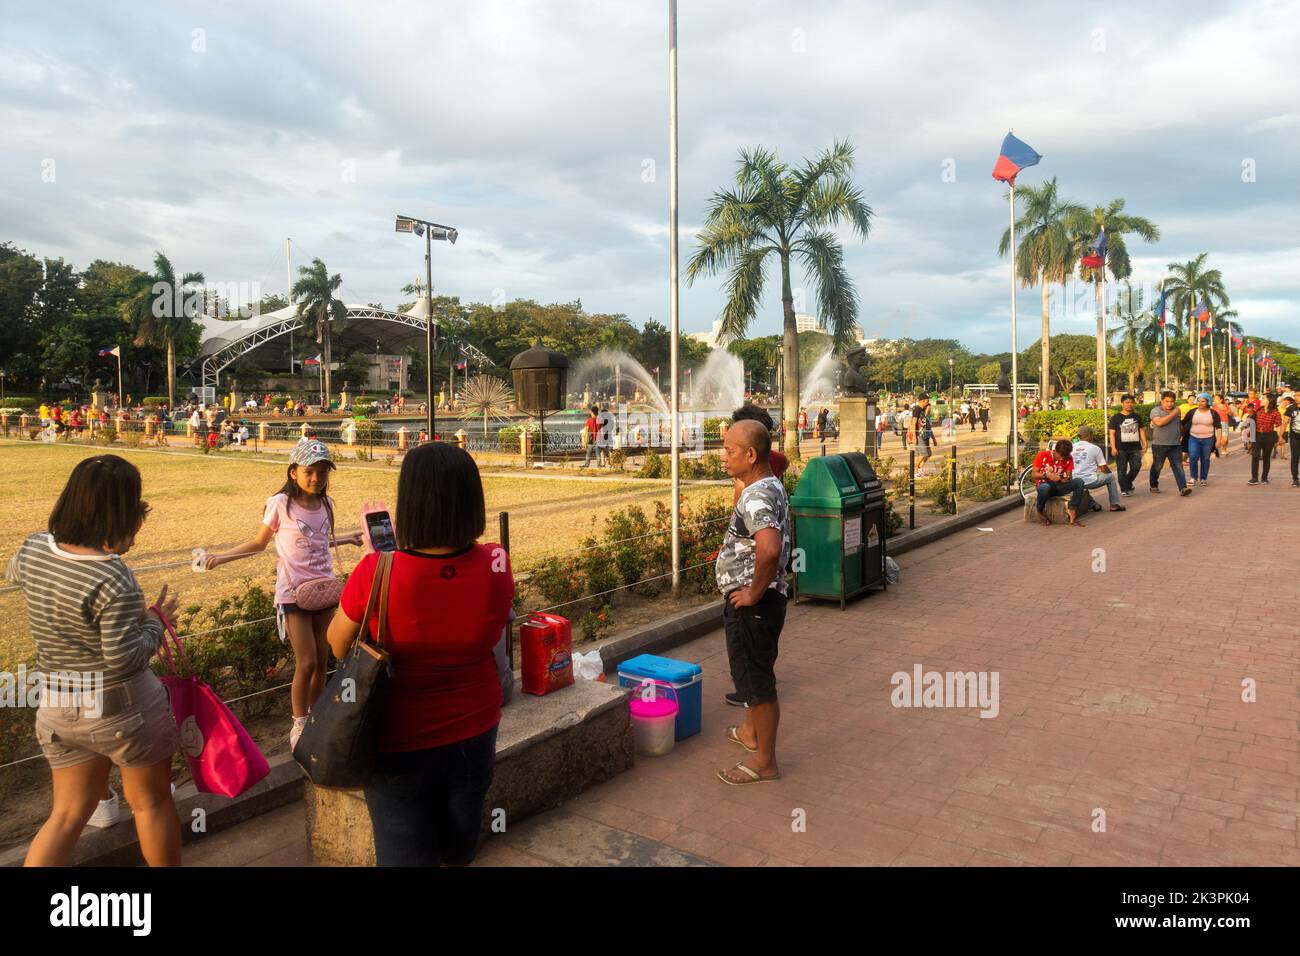 Manila, Philippines - People enjoying a sunny day at Rizal Park Stock Photo